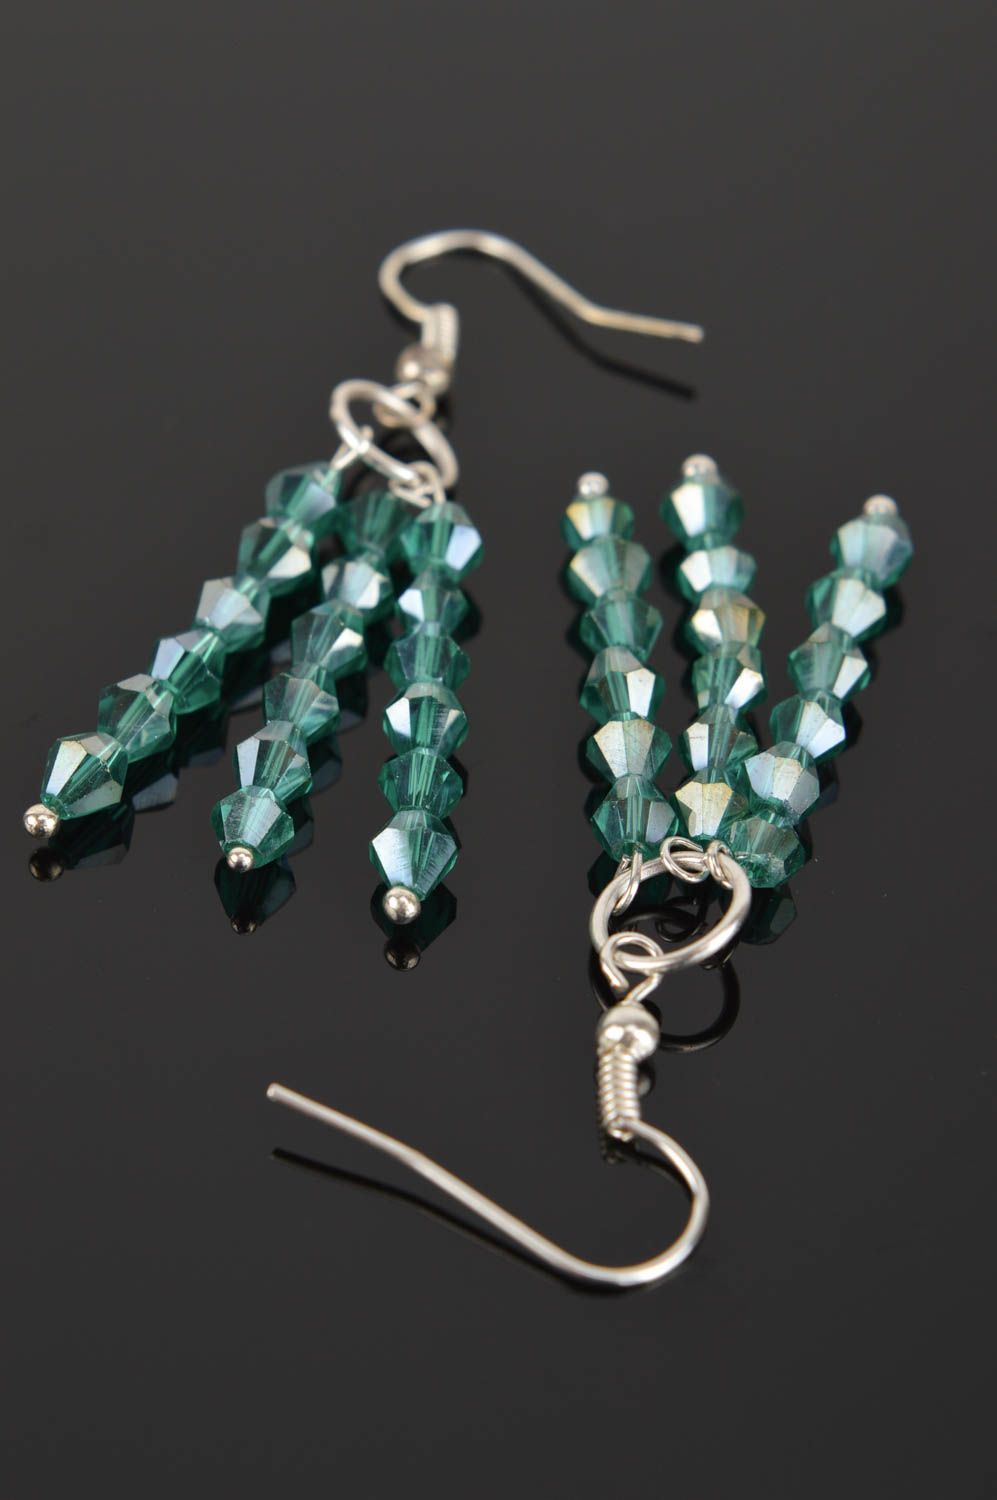 Crystal earrings handmade jewelry earrings with charms fashion jewelry photo 2